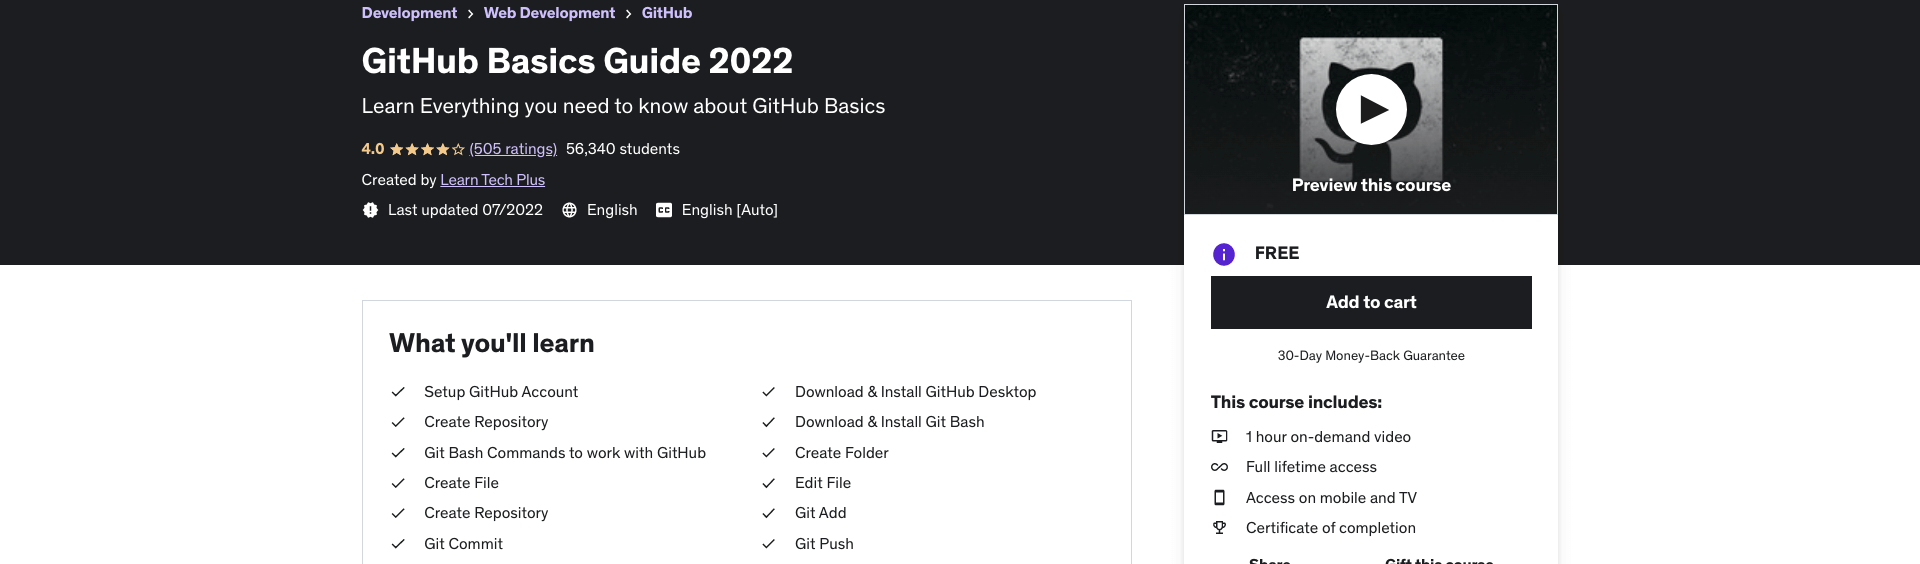 GitHub Basics Guide 2022